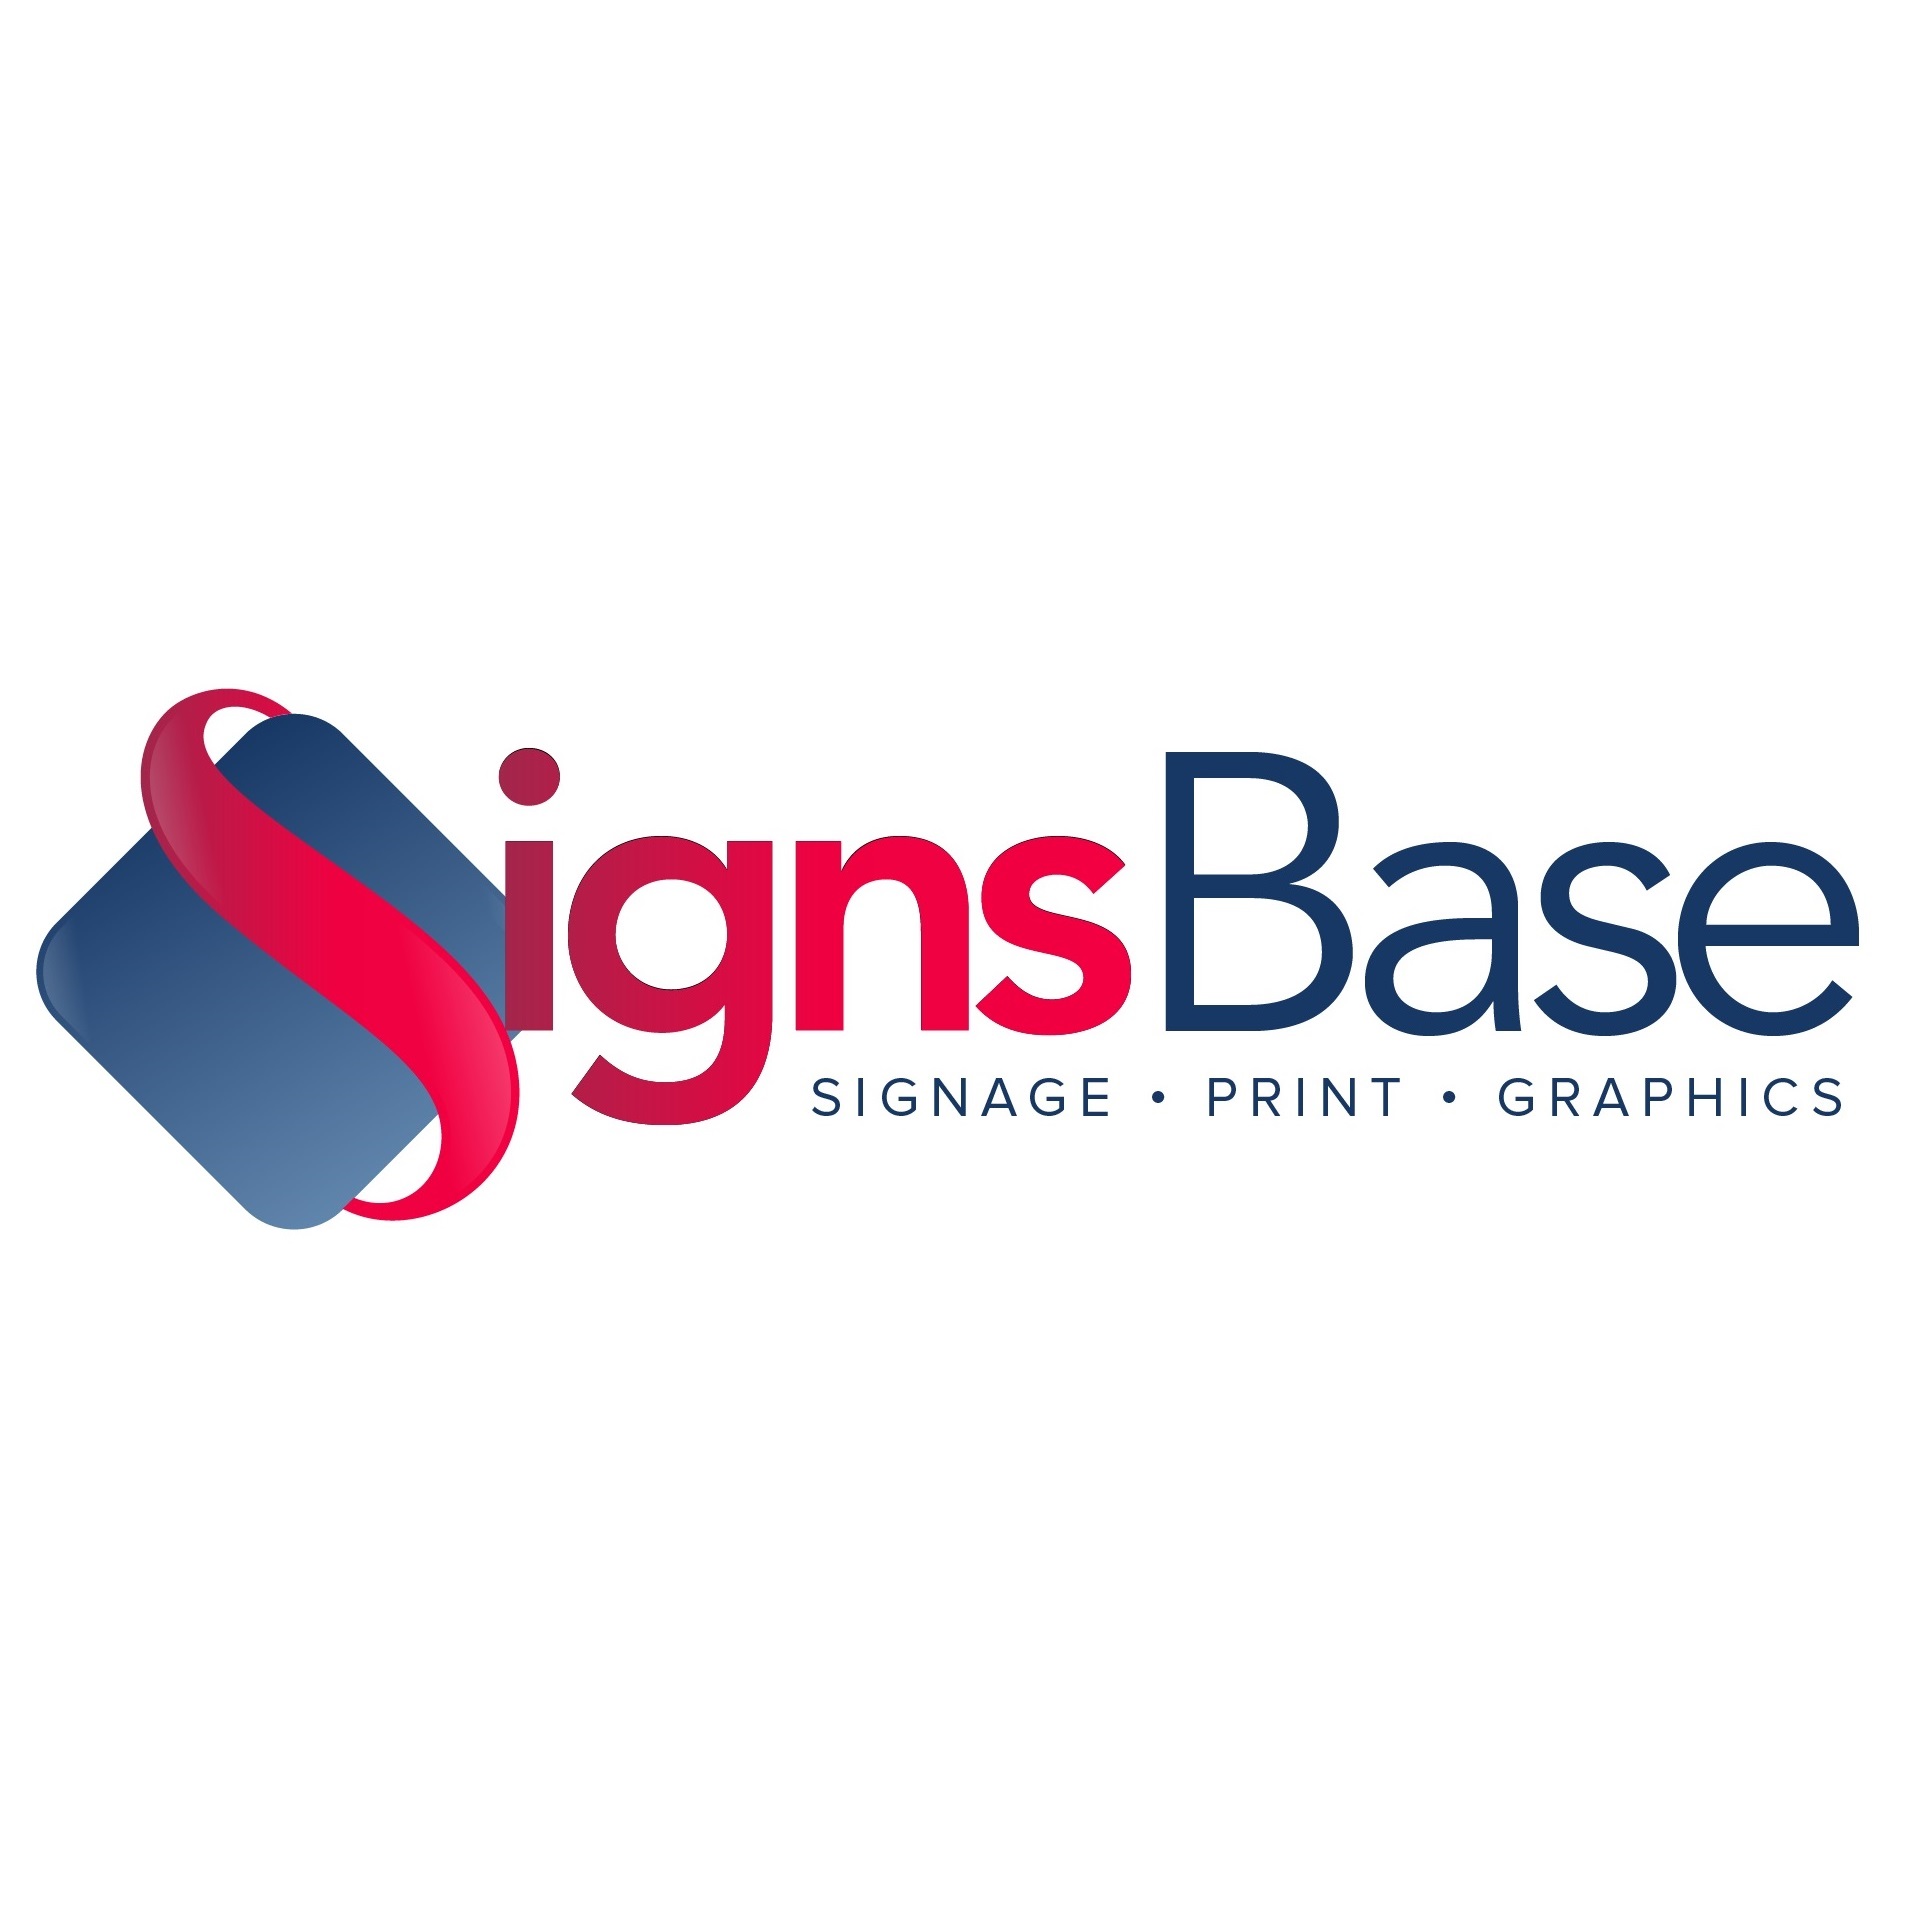 Logo of Signs Base Ltd